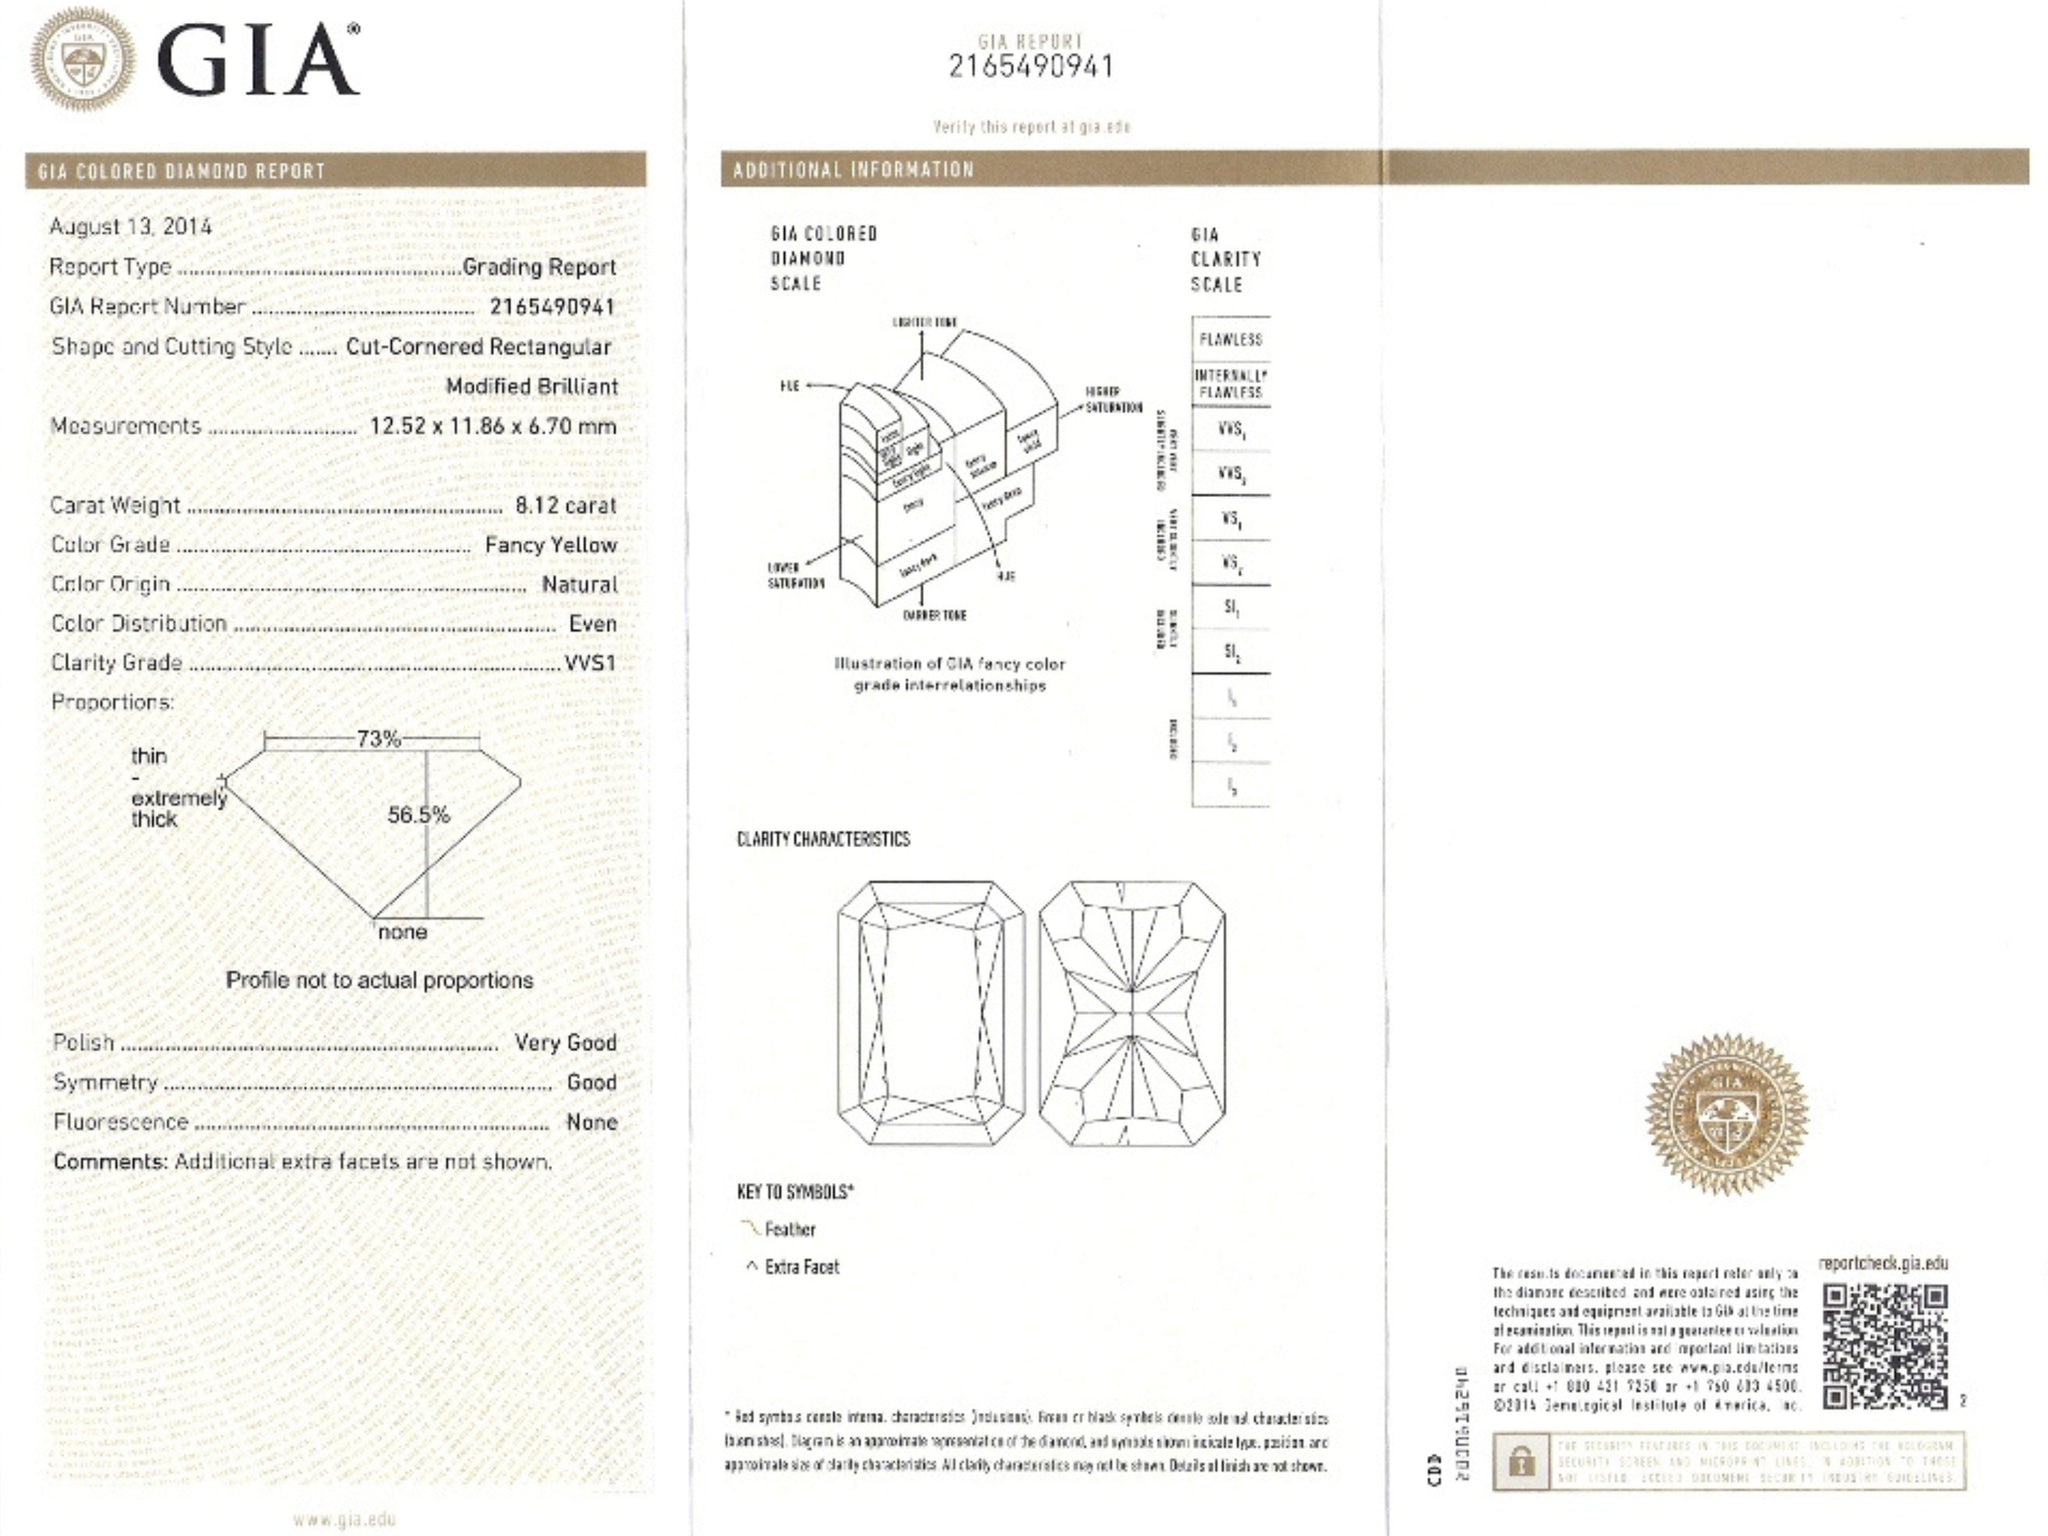 Extraordinary GIA Certified 50 Carat Fancy Yellow Diamond Necklace in 18K Gold